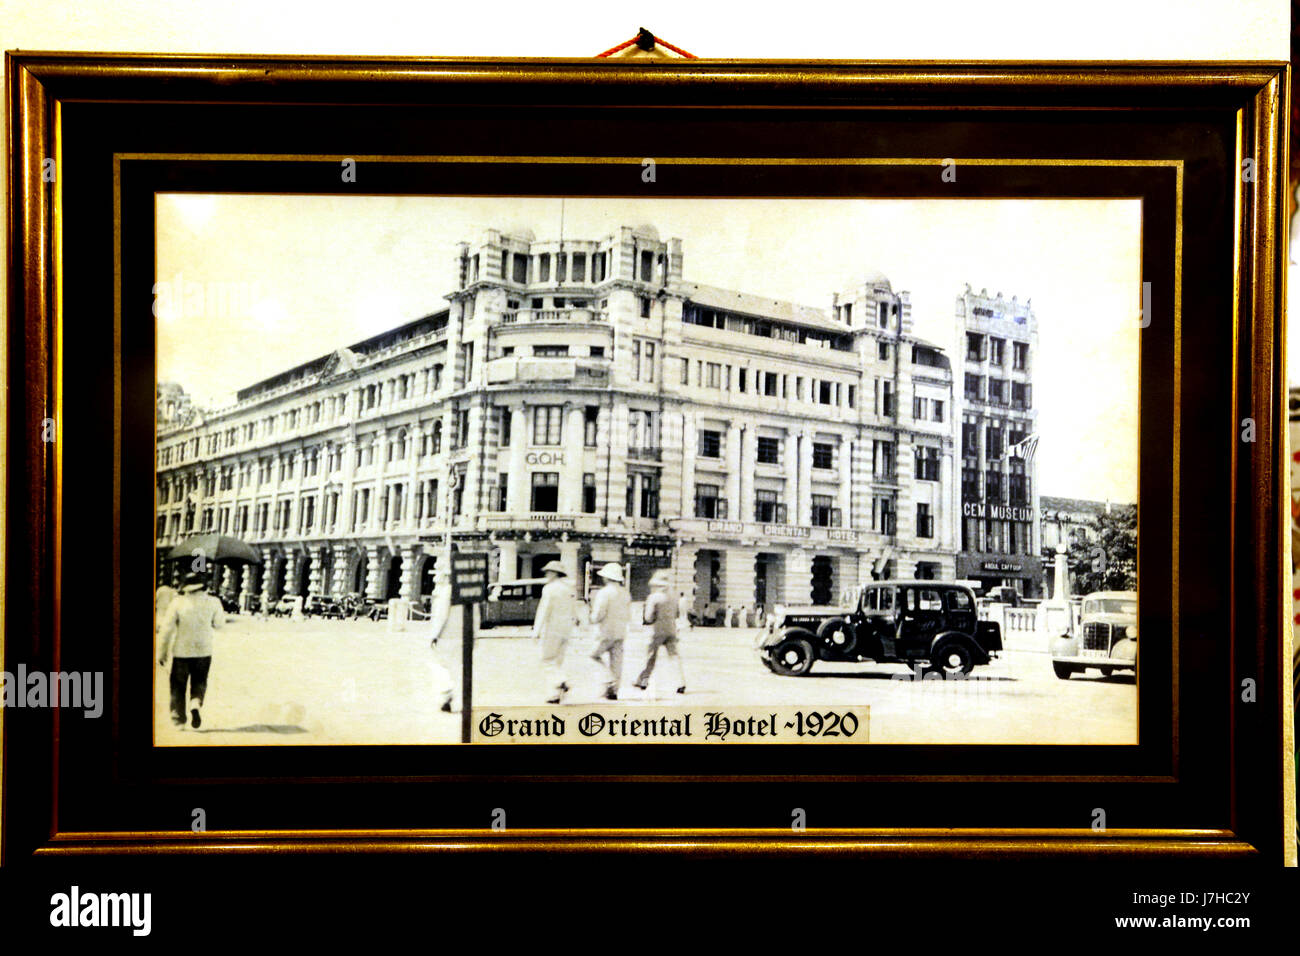 Fort Colombo Sri Lanka alte 1920 Foto des Grand Oriental Hotel Stockfoto